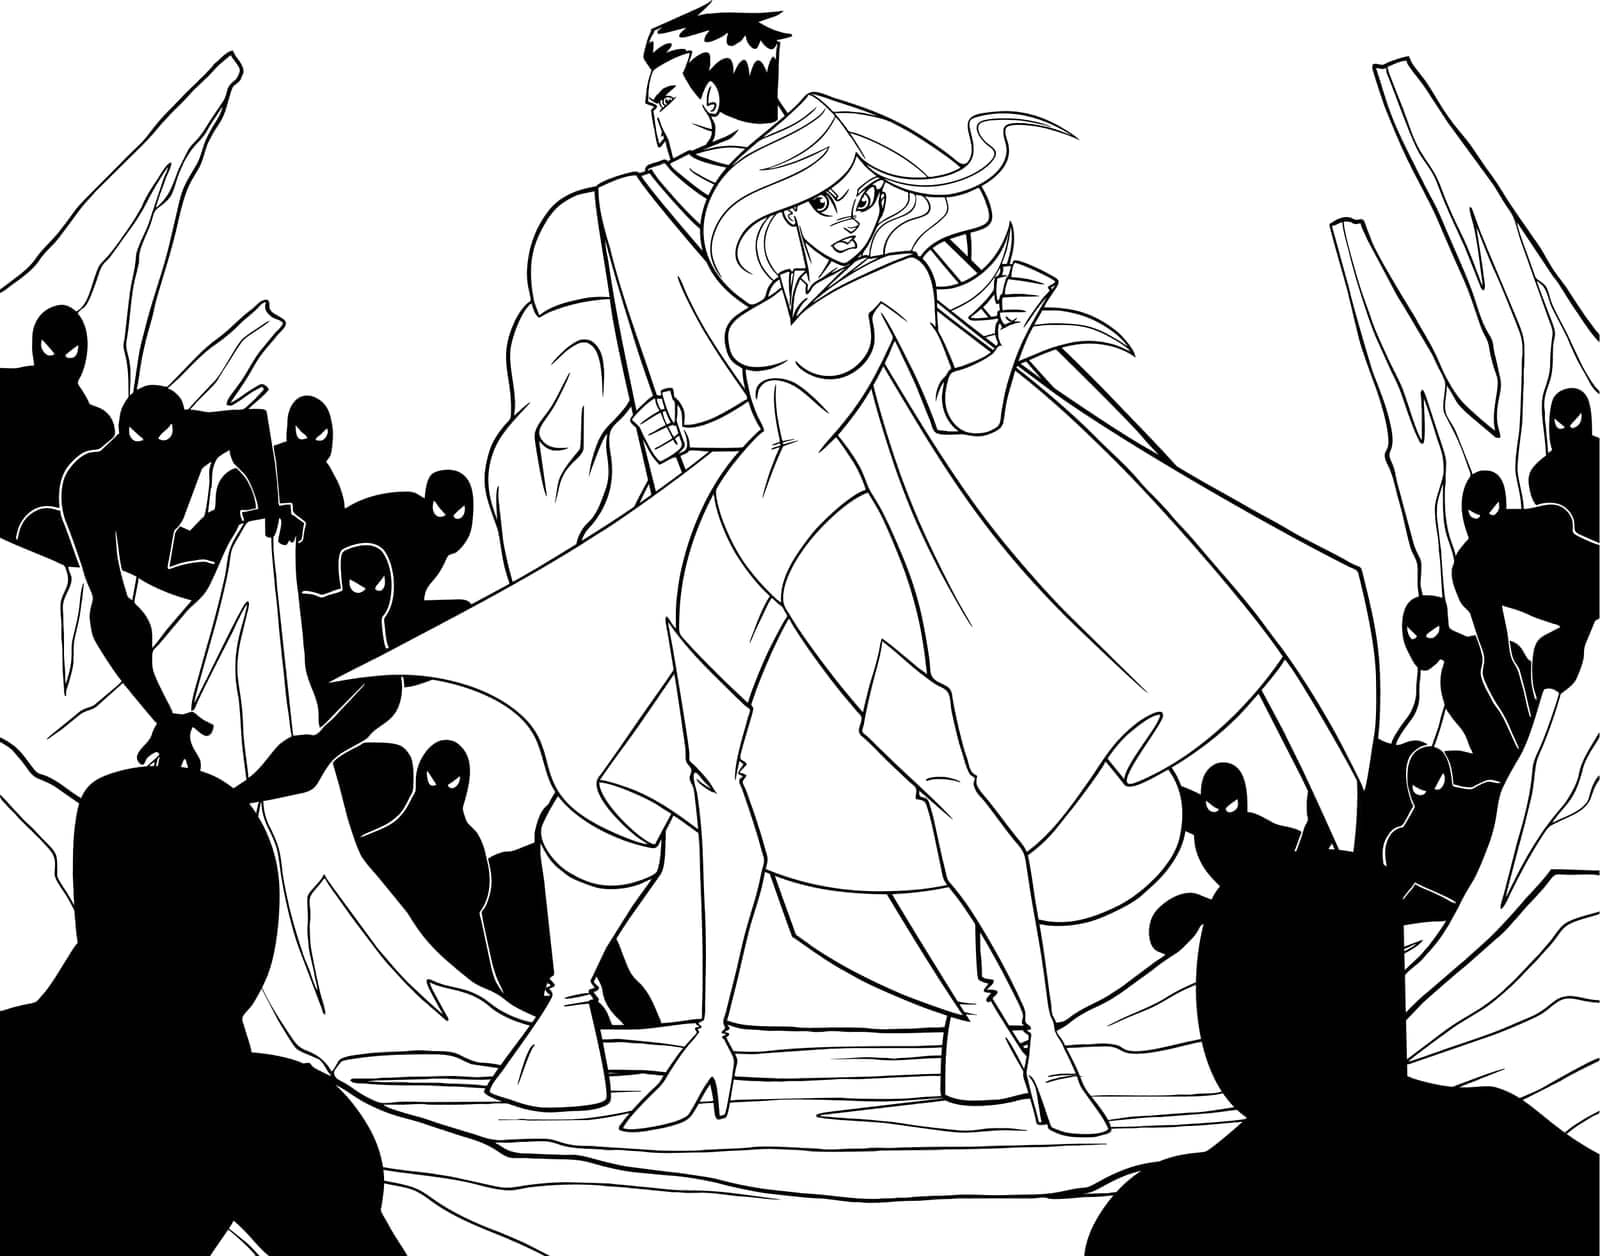 Superhero Couple Back to Back Line Art by Malchev